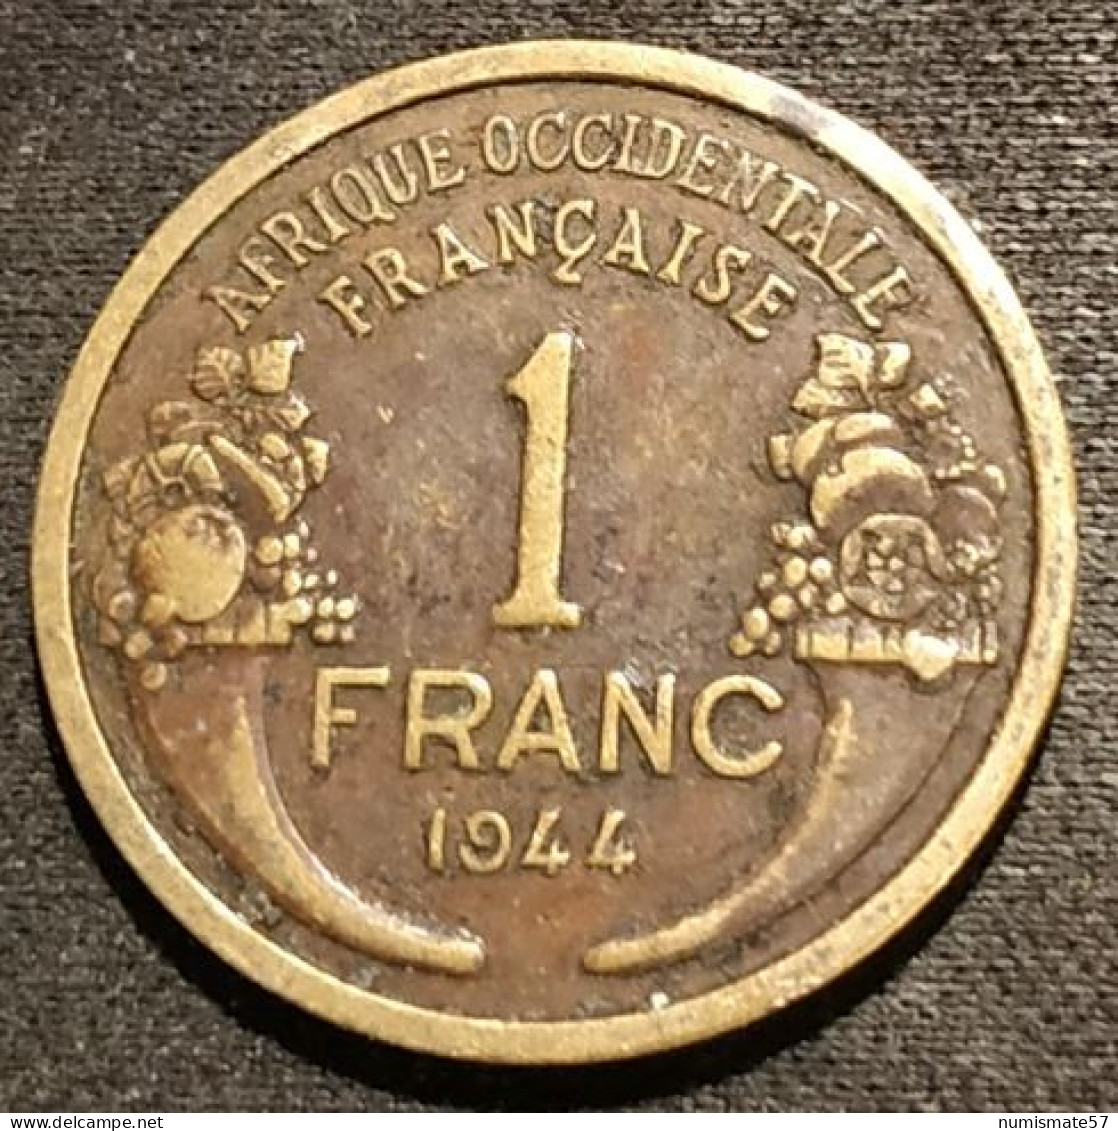 AFRIQUE OCCIDENTALE FRANÇAISE - 1 FRANC 1944 - Morlon - KM 2 - Französisch-Westafrika